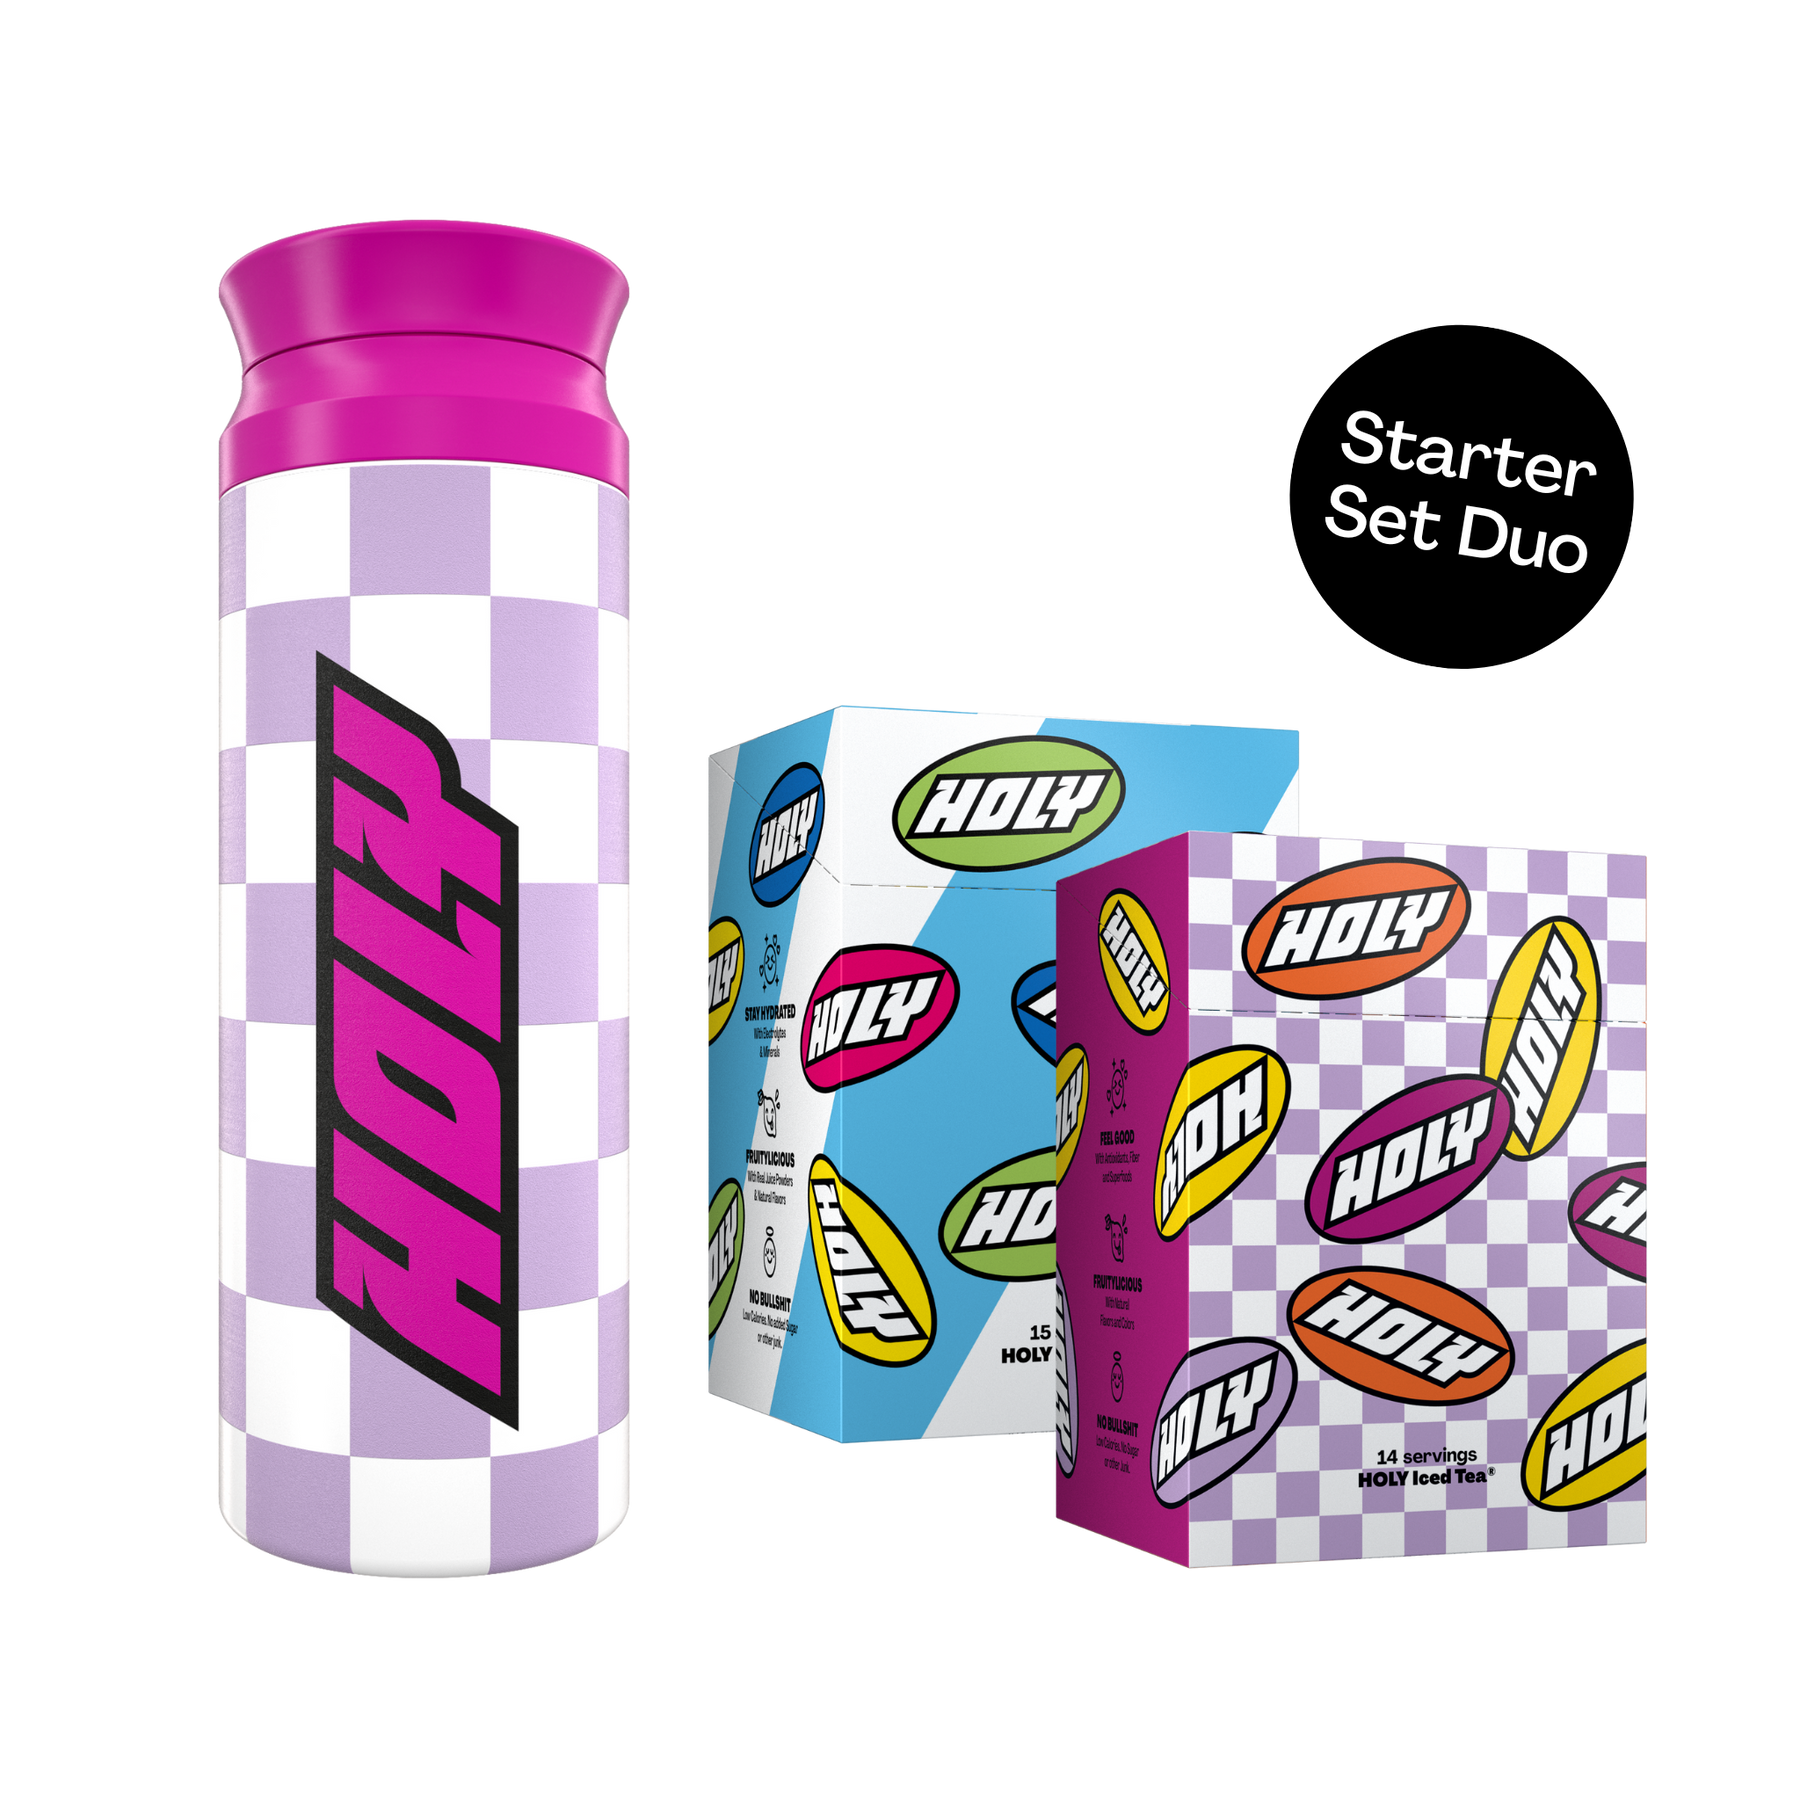 Starter Set Duo (Hydration x Iced Tea)